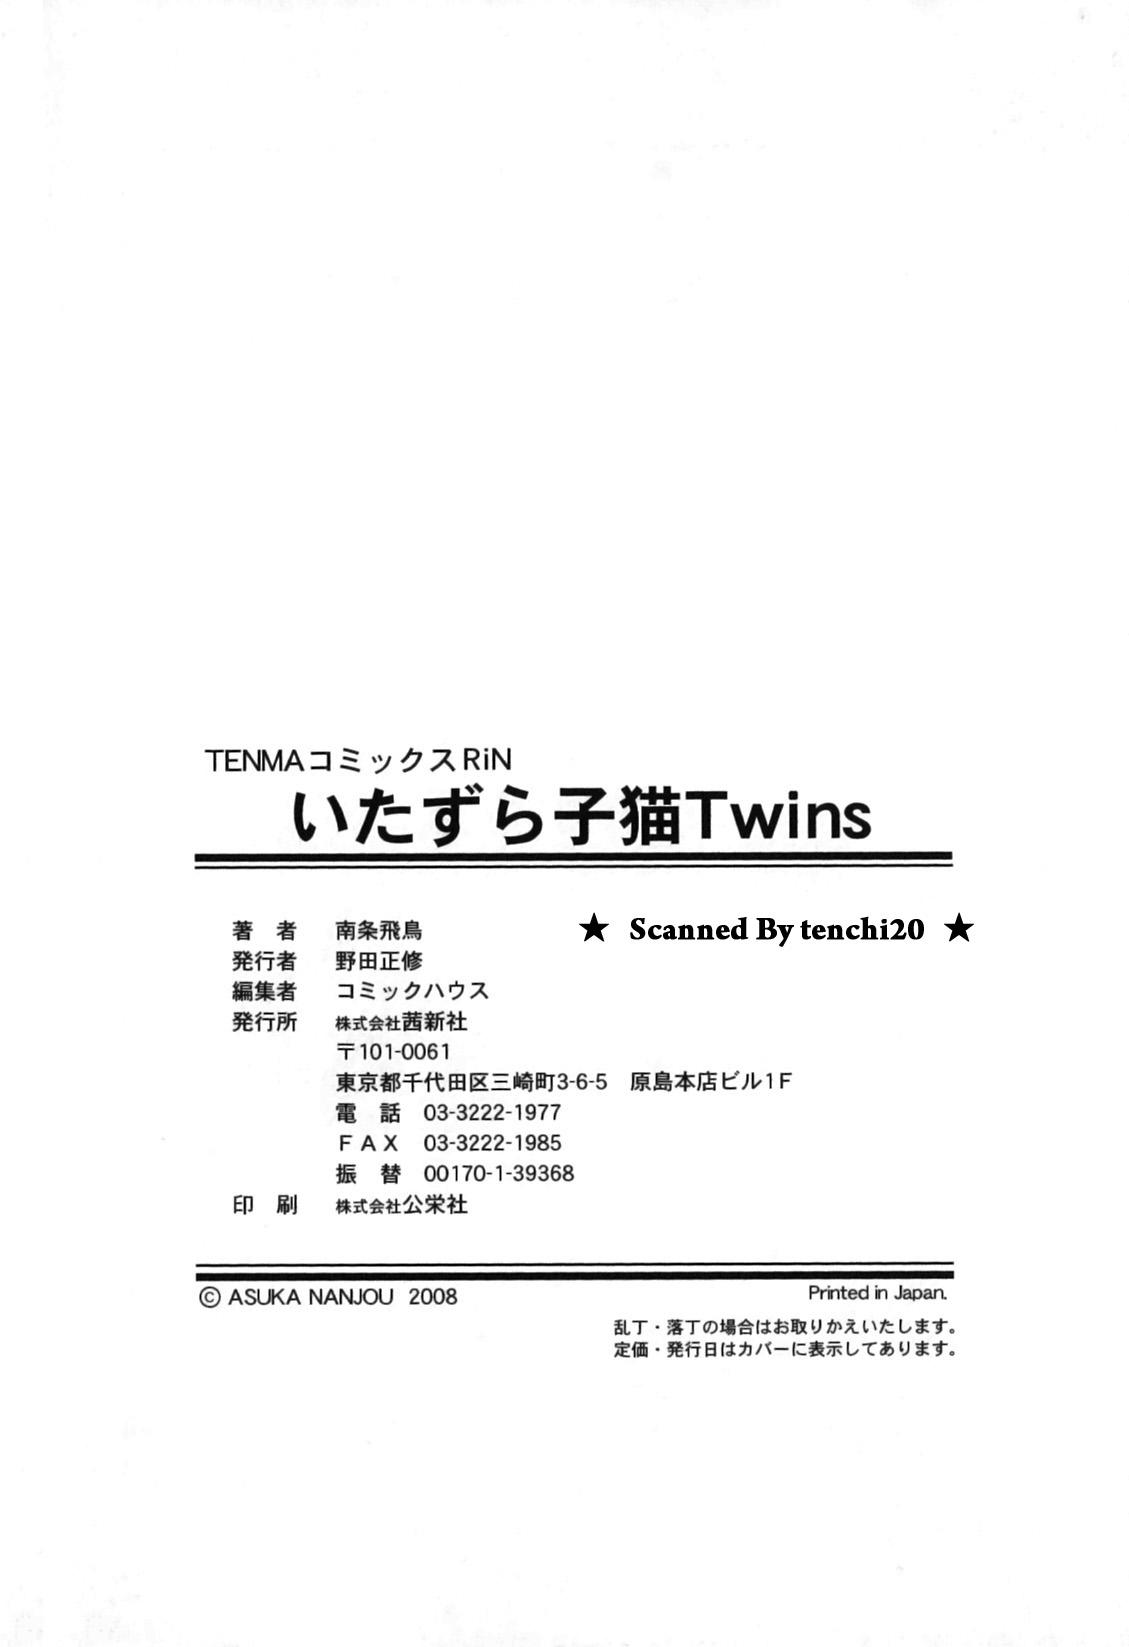 Itazura Koneko Twins 193